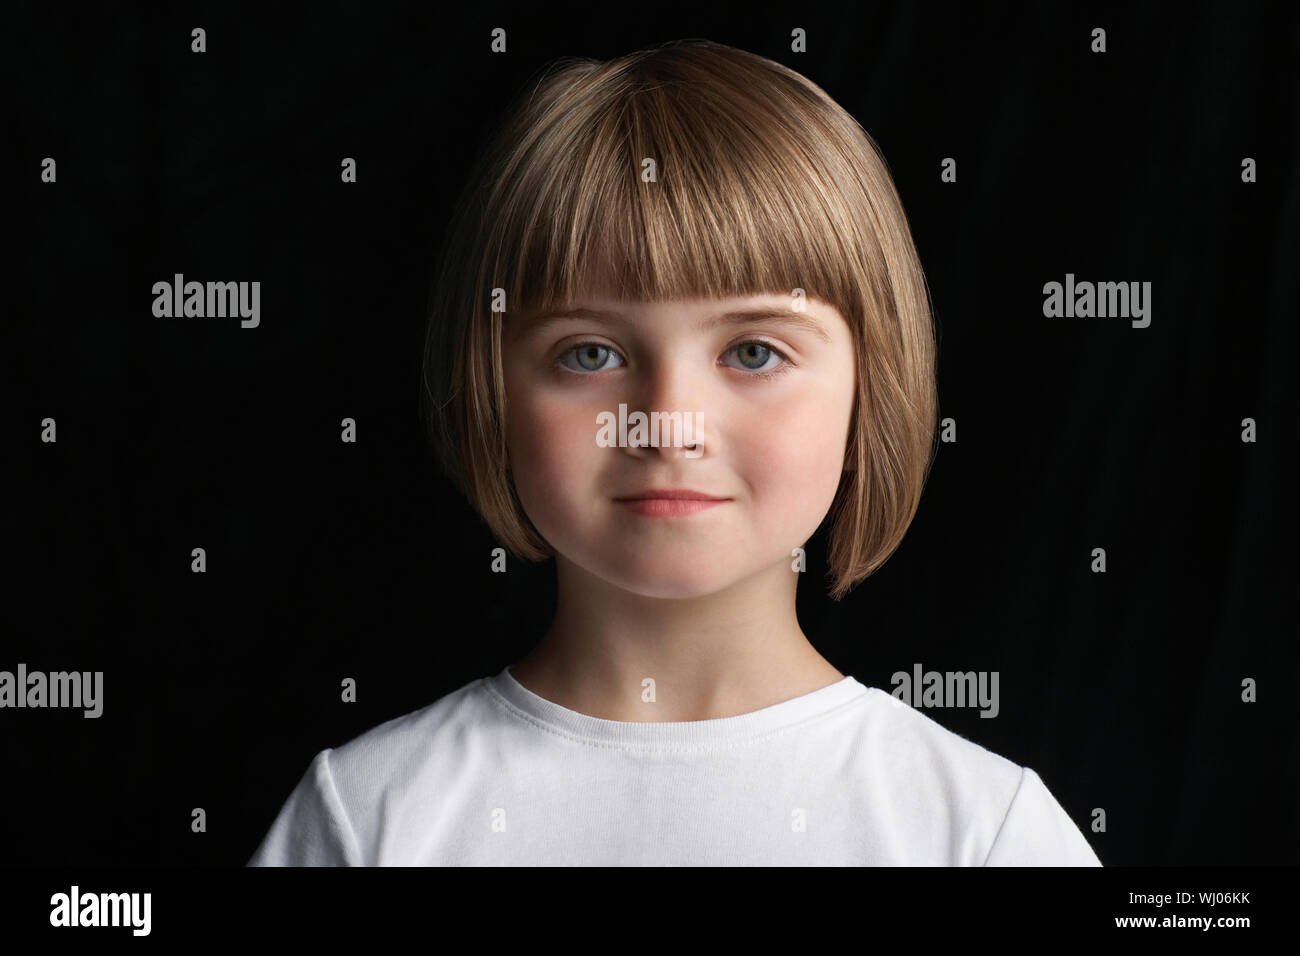 Closeup Portrait Of Cute Little Girl With Short Hair